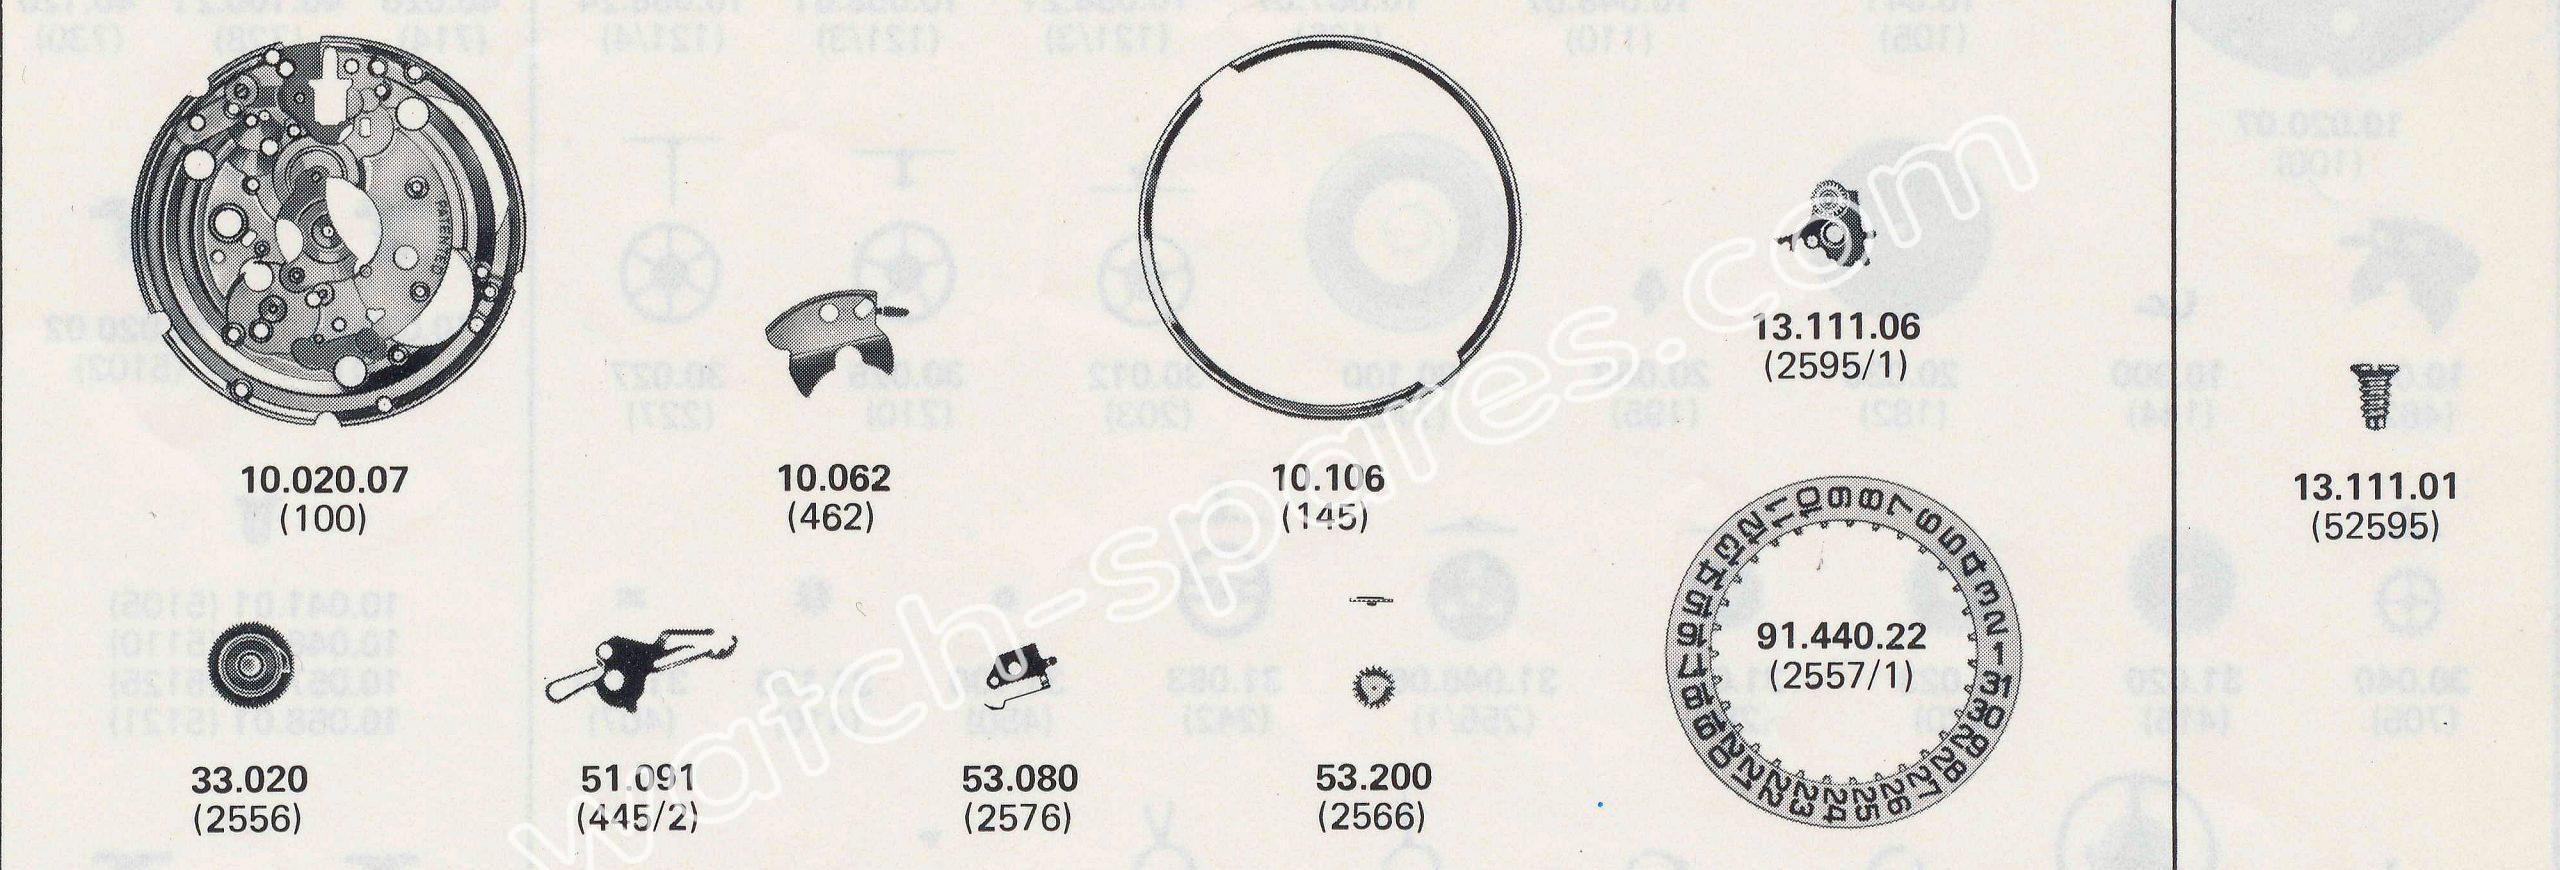 ETA 2804.2 watch date spare parts